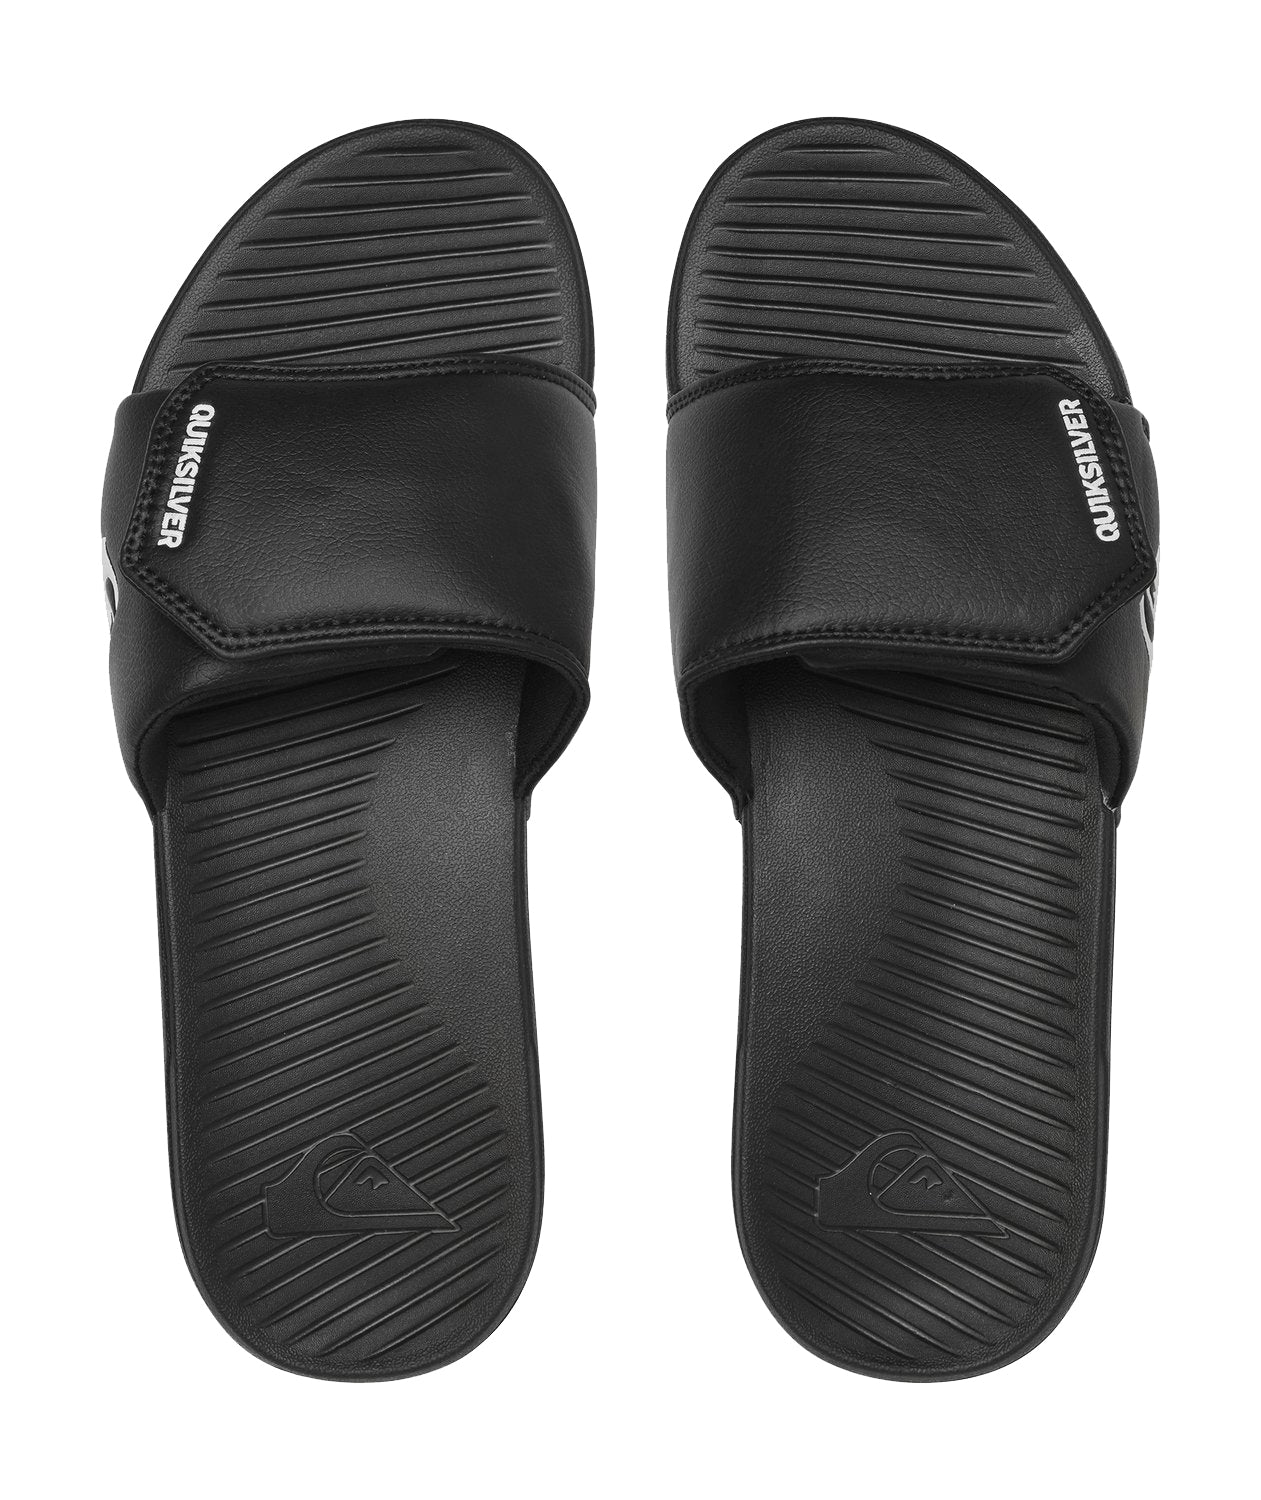 Quiksilver Bright Coast Adjust Mens Sandal XKWK-Black-White-Black 8